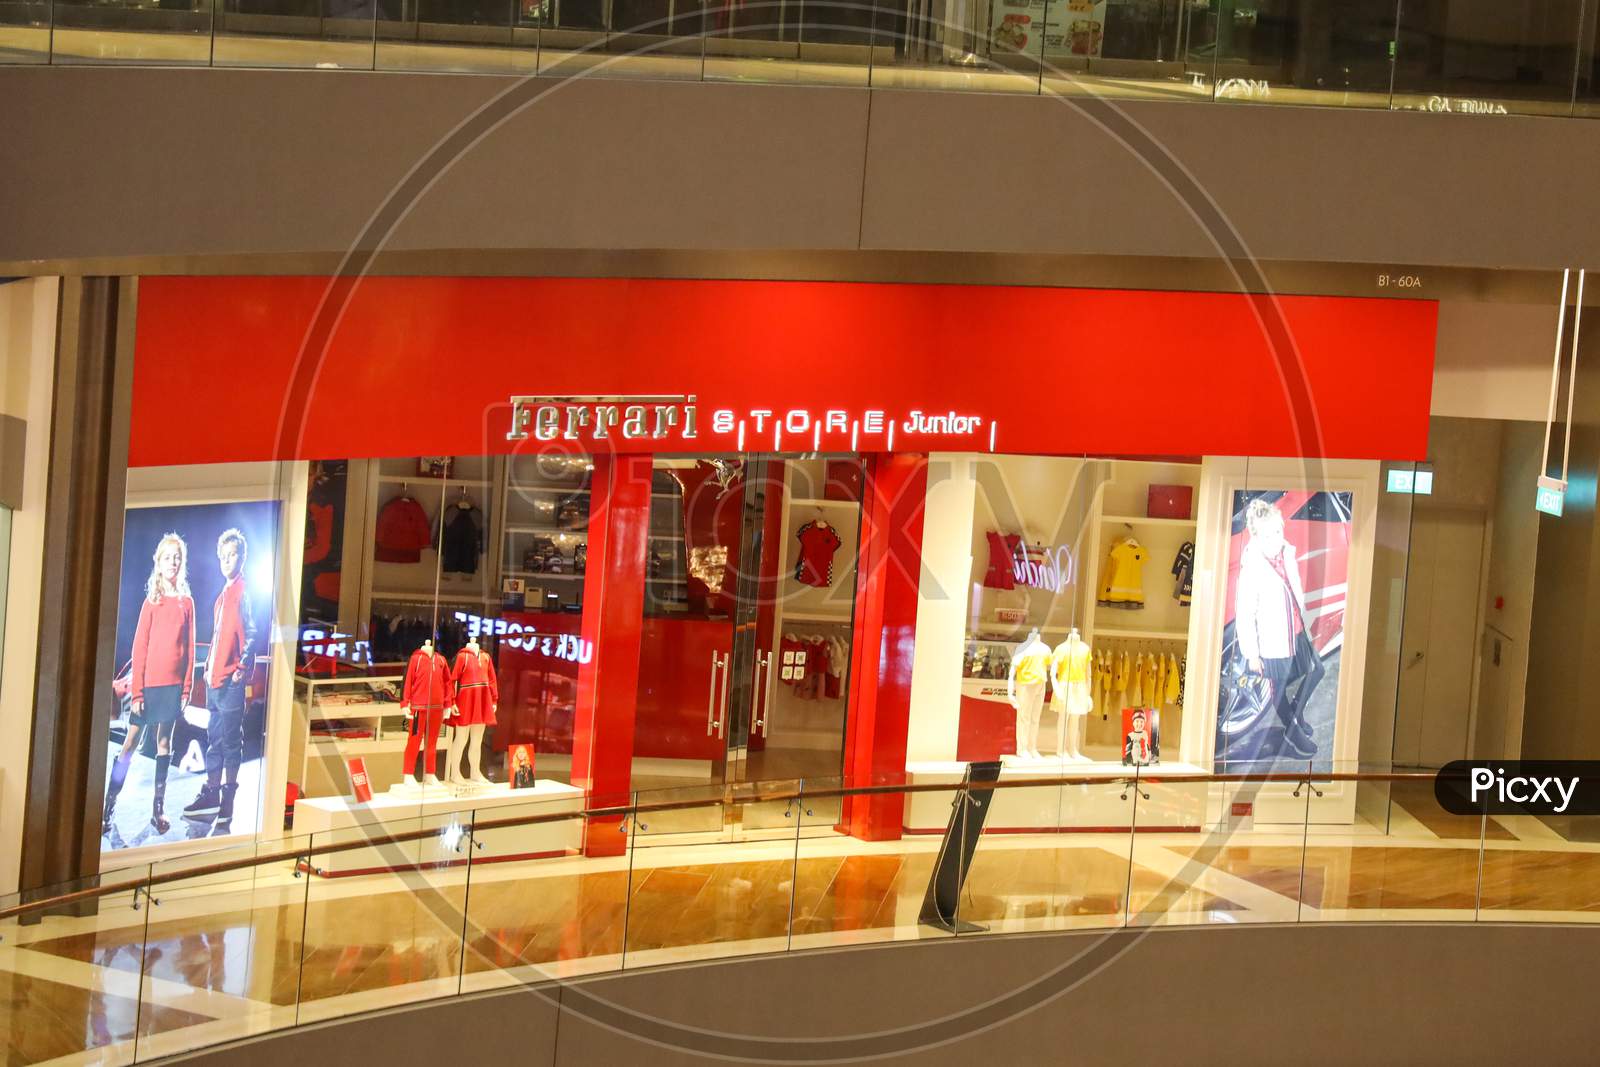 Ferrari Junior Fashion Store